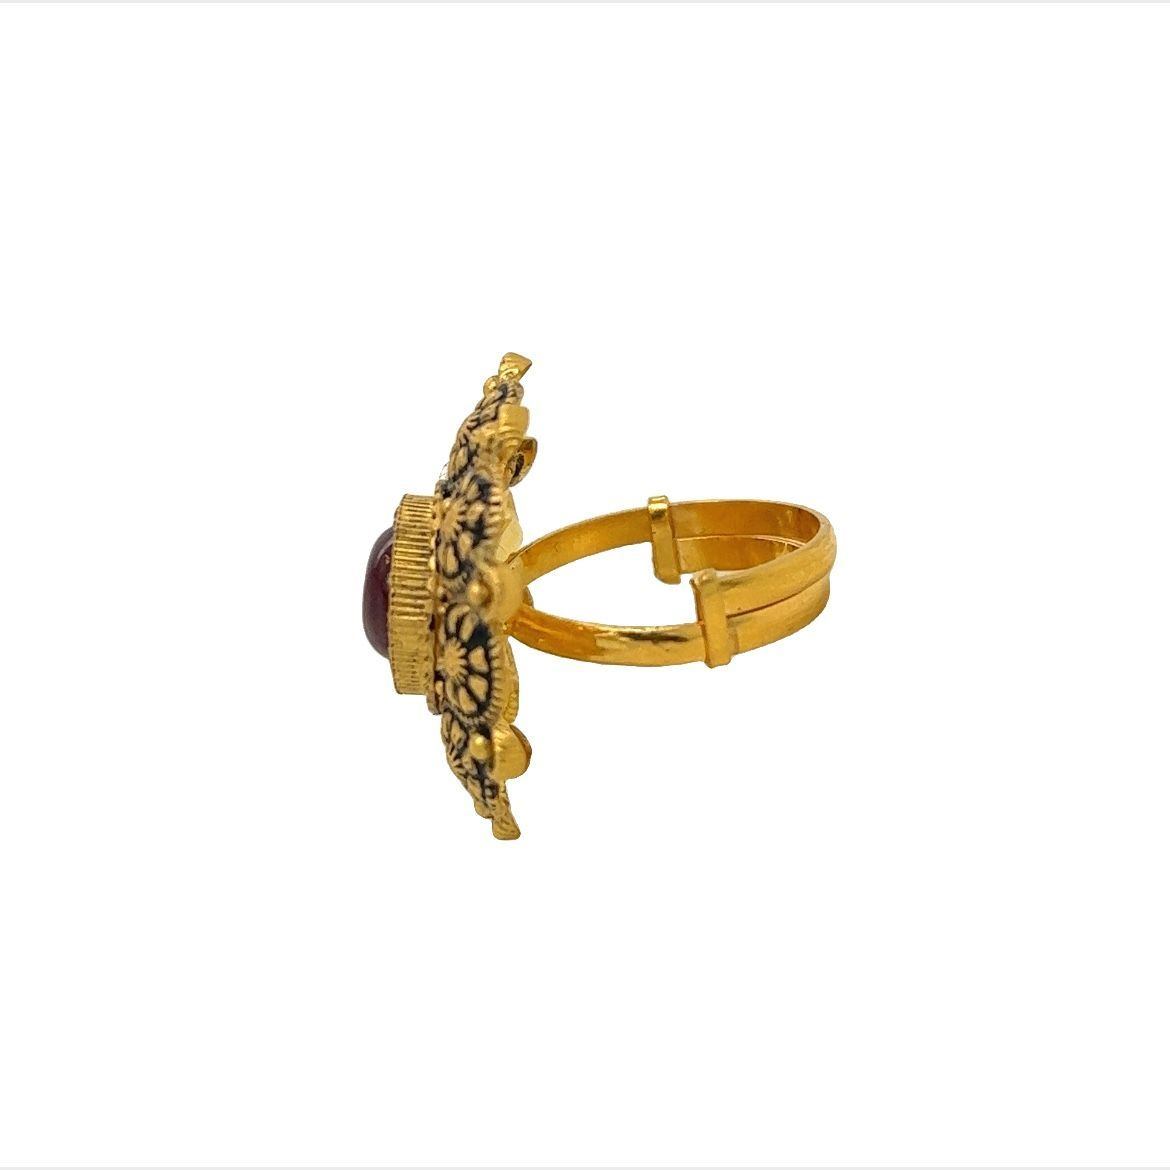 Buy Senco Gold 22k (916) Yellow Gold Ring for Men at Amazon.in